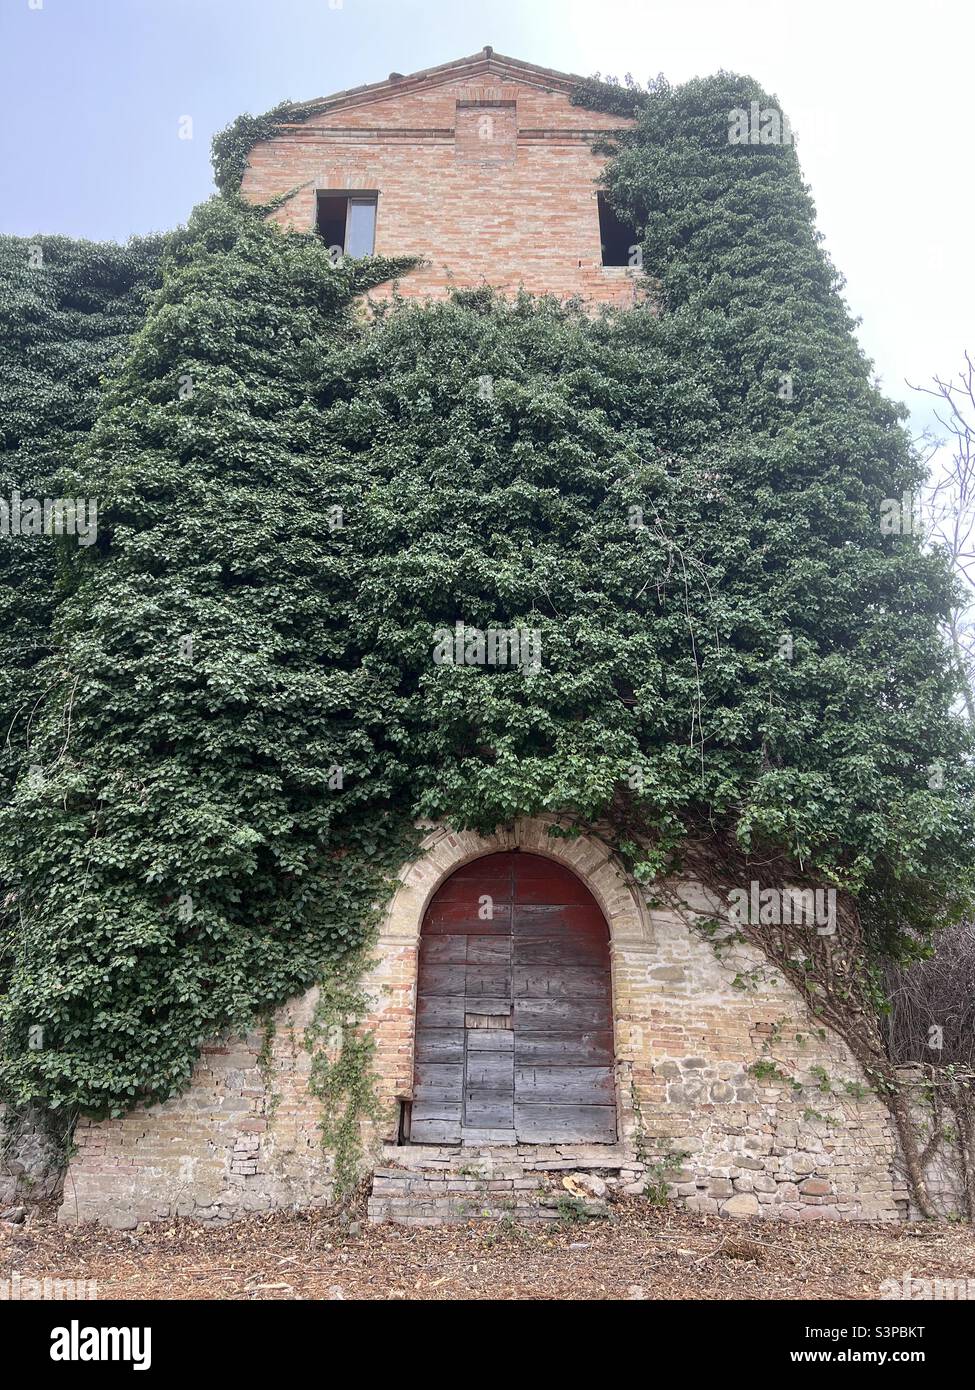 Oriental entrance of the Montevarmine castle, Carassai, Marche region, Italy Stock Photo